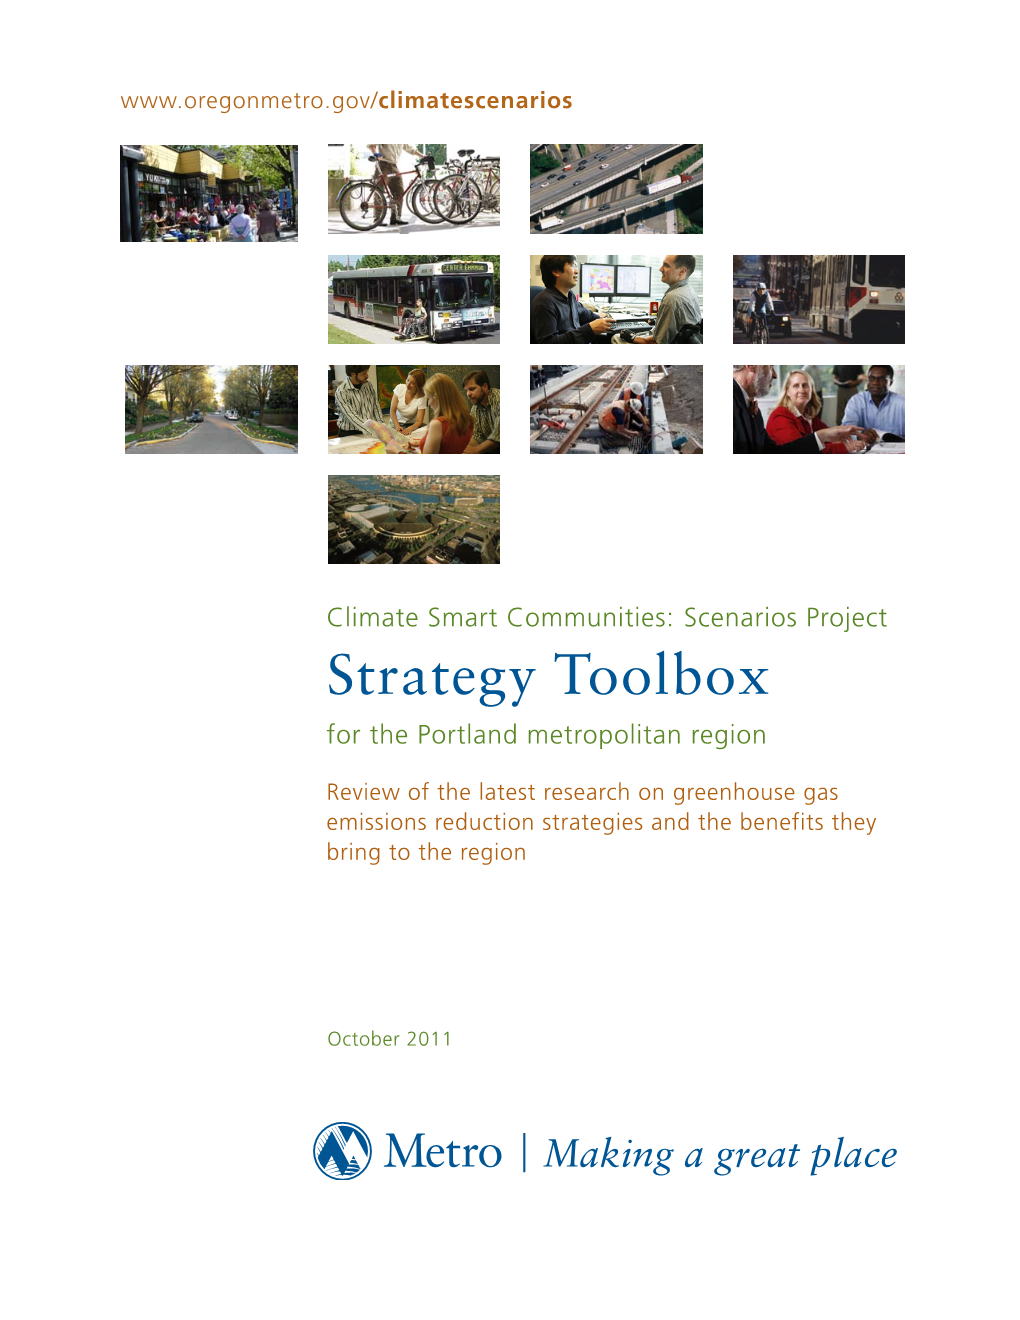 Strategy Toolbox for the Portland Metropolitan Region